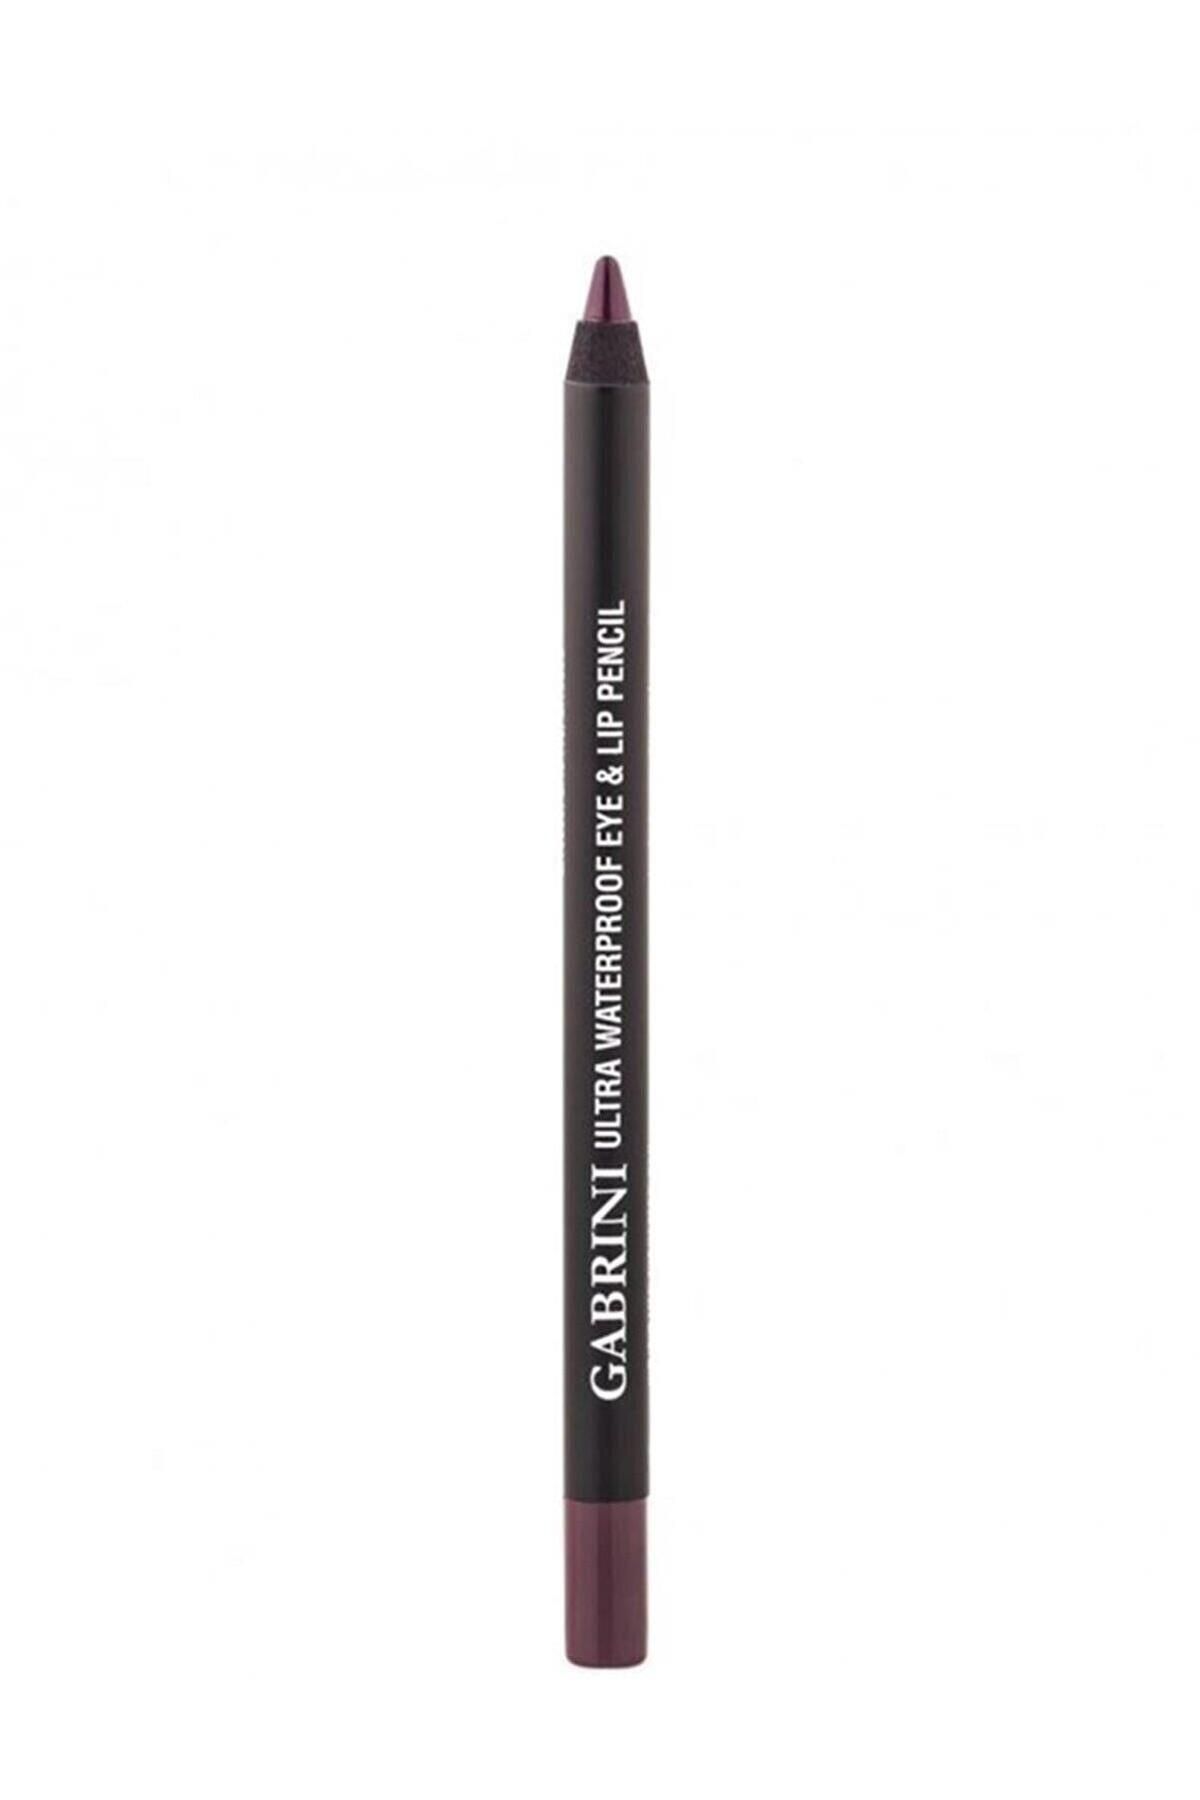 Gabrini Ultra Waterproof Eye & Lip Pencil 13